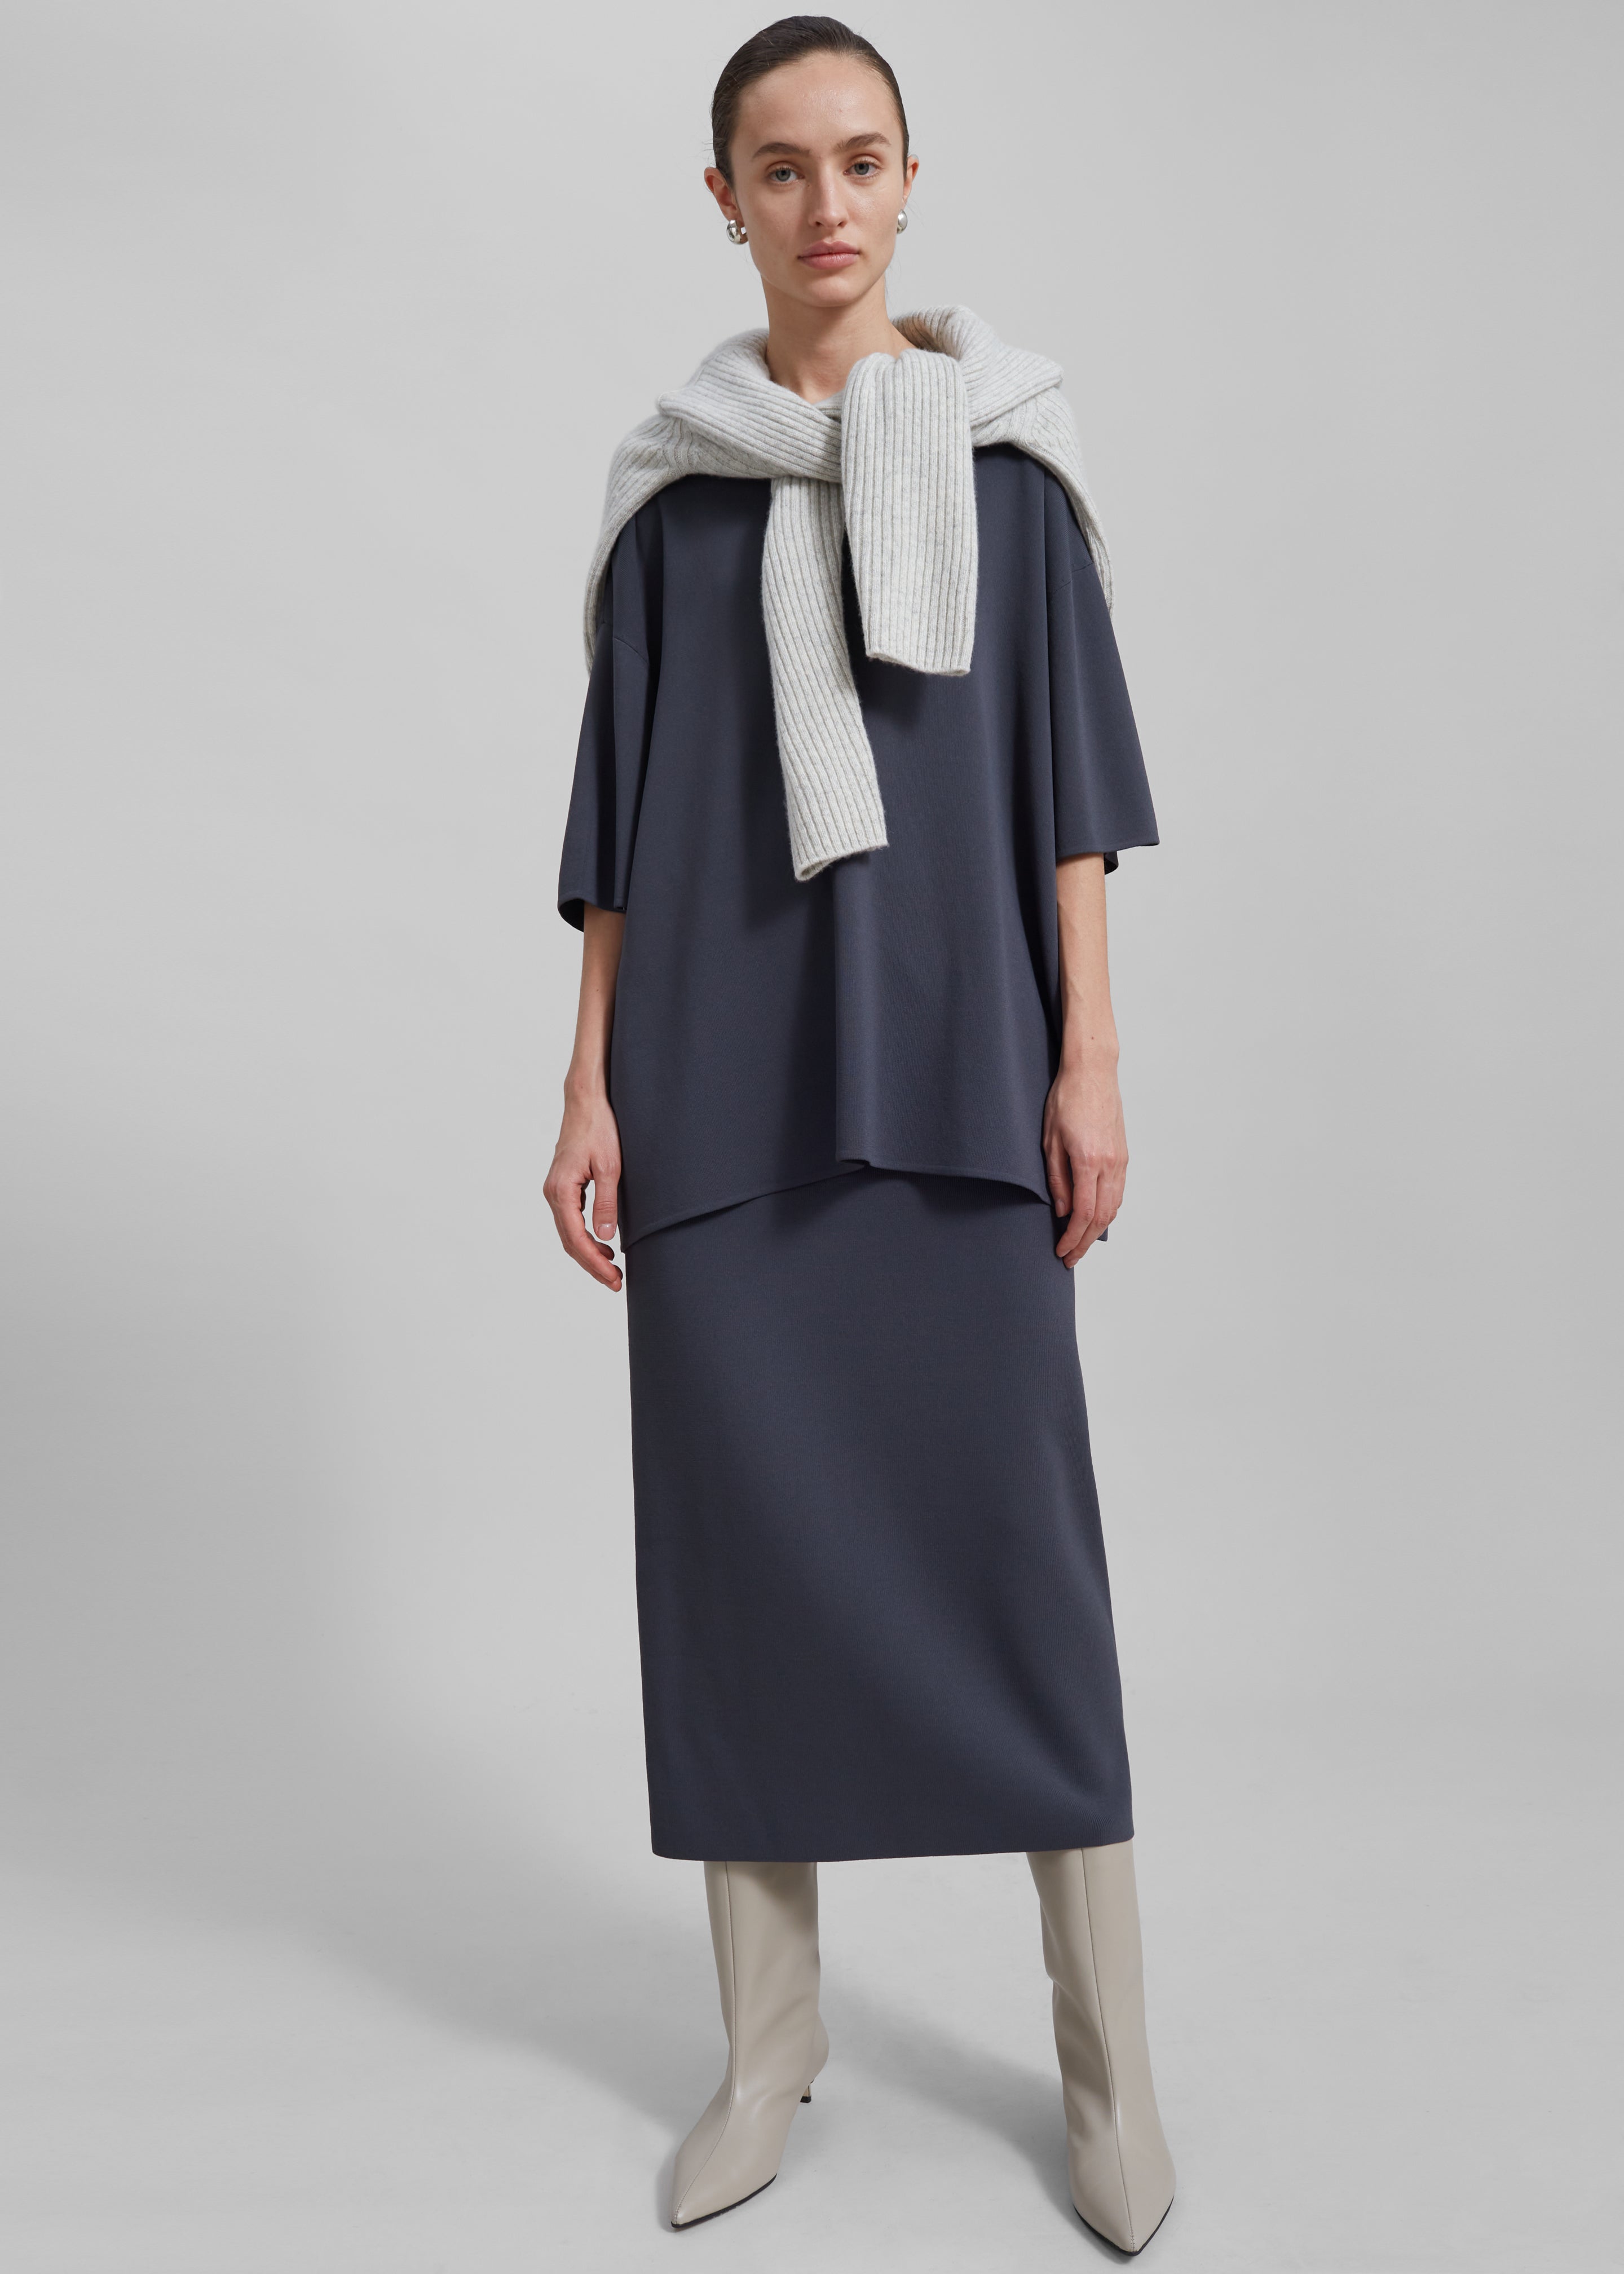 Solange Knit Pencil Skirt - Grey - 8